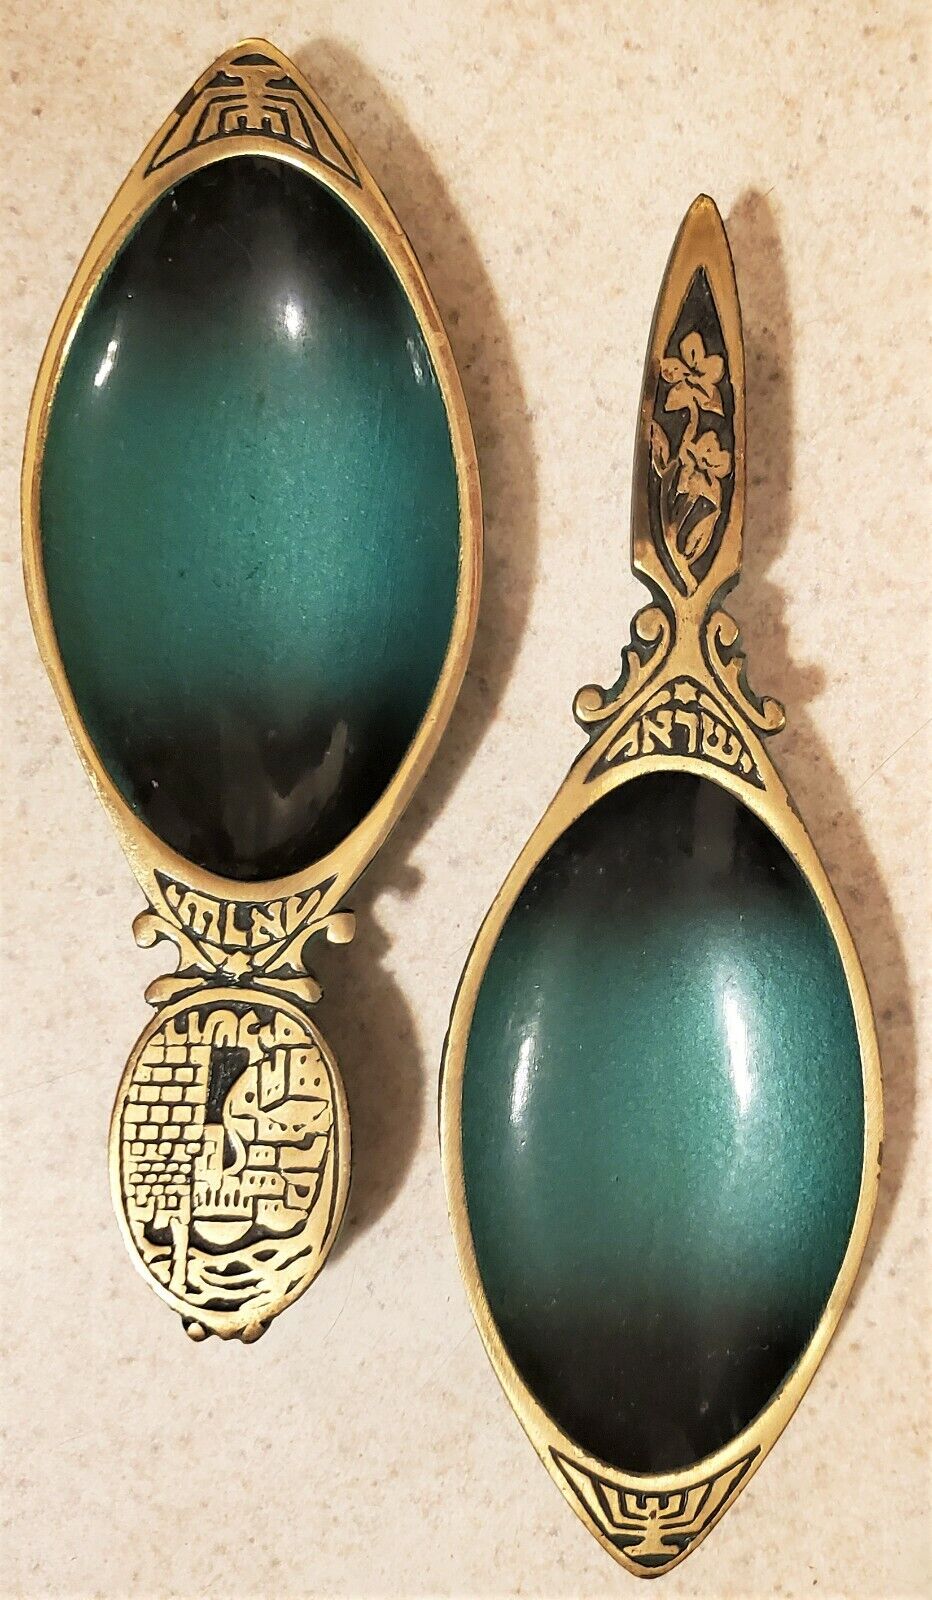 Lot of 2 - Judaica - Spoon rests - Made In Israel, brass/enamel, R.D.M., 